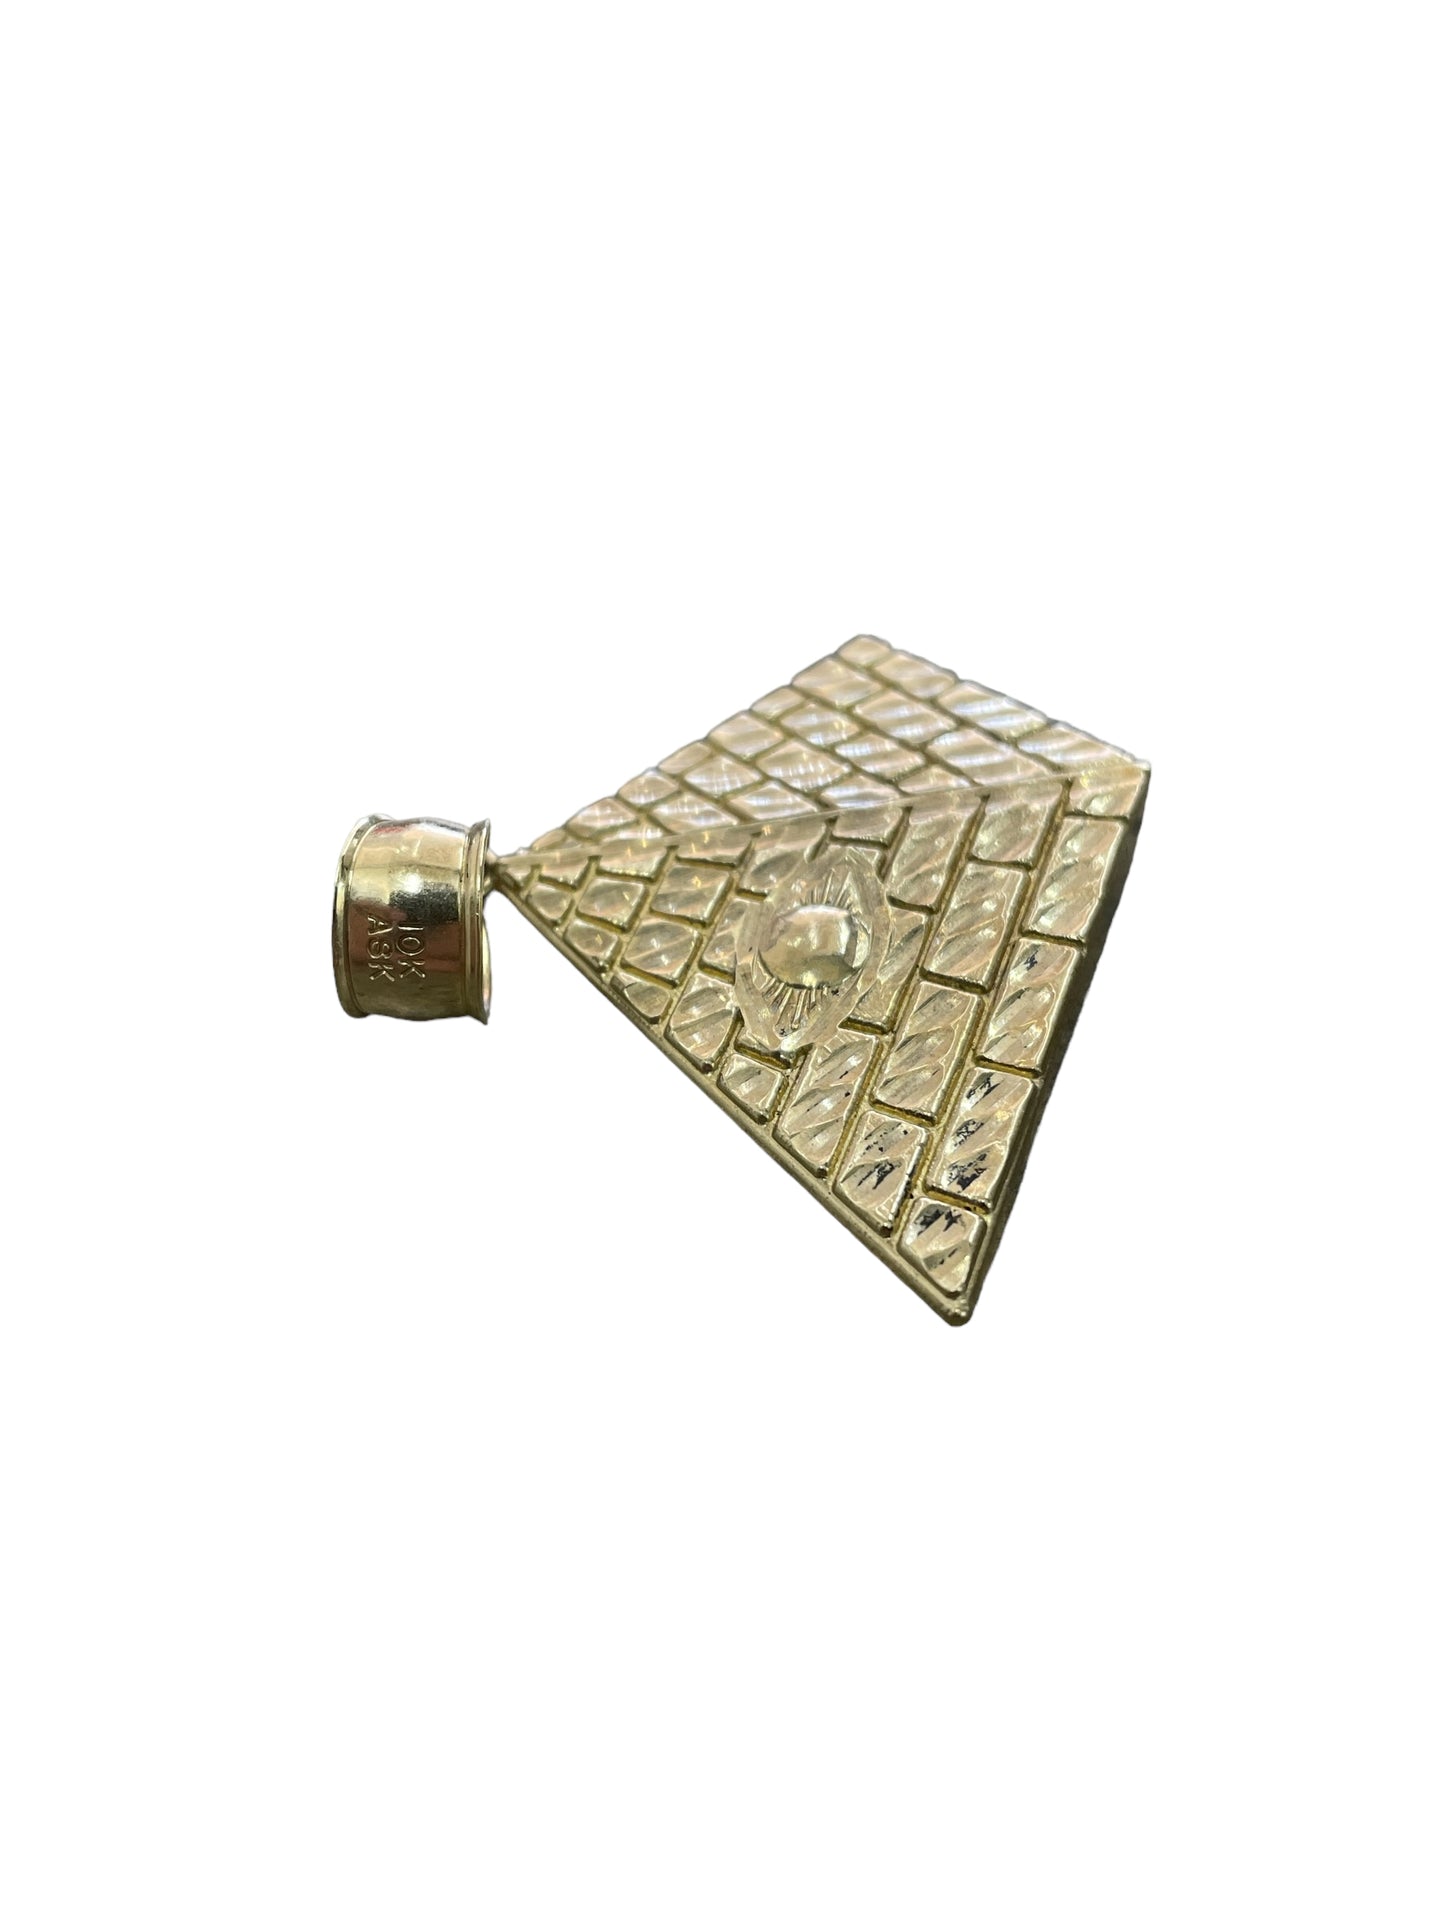 10K Yellow Gold Pyramid Charm (8.7 Grams)